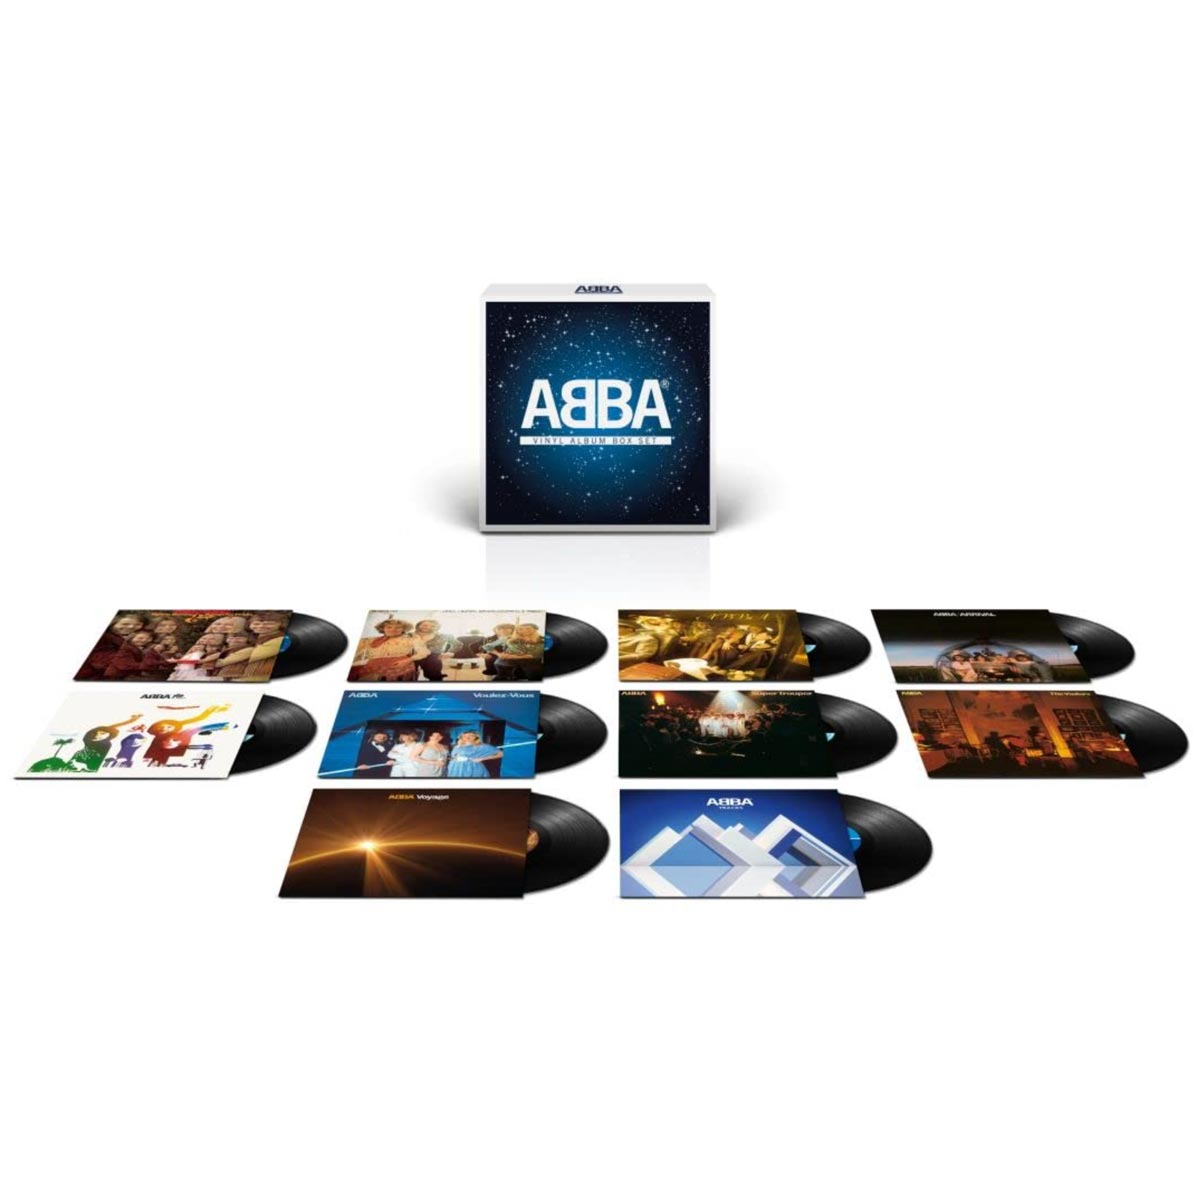 ABBA - Studio albums (Ltd Box) - 10 x LP